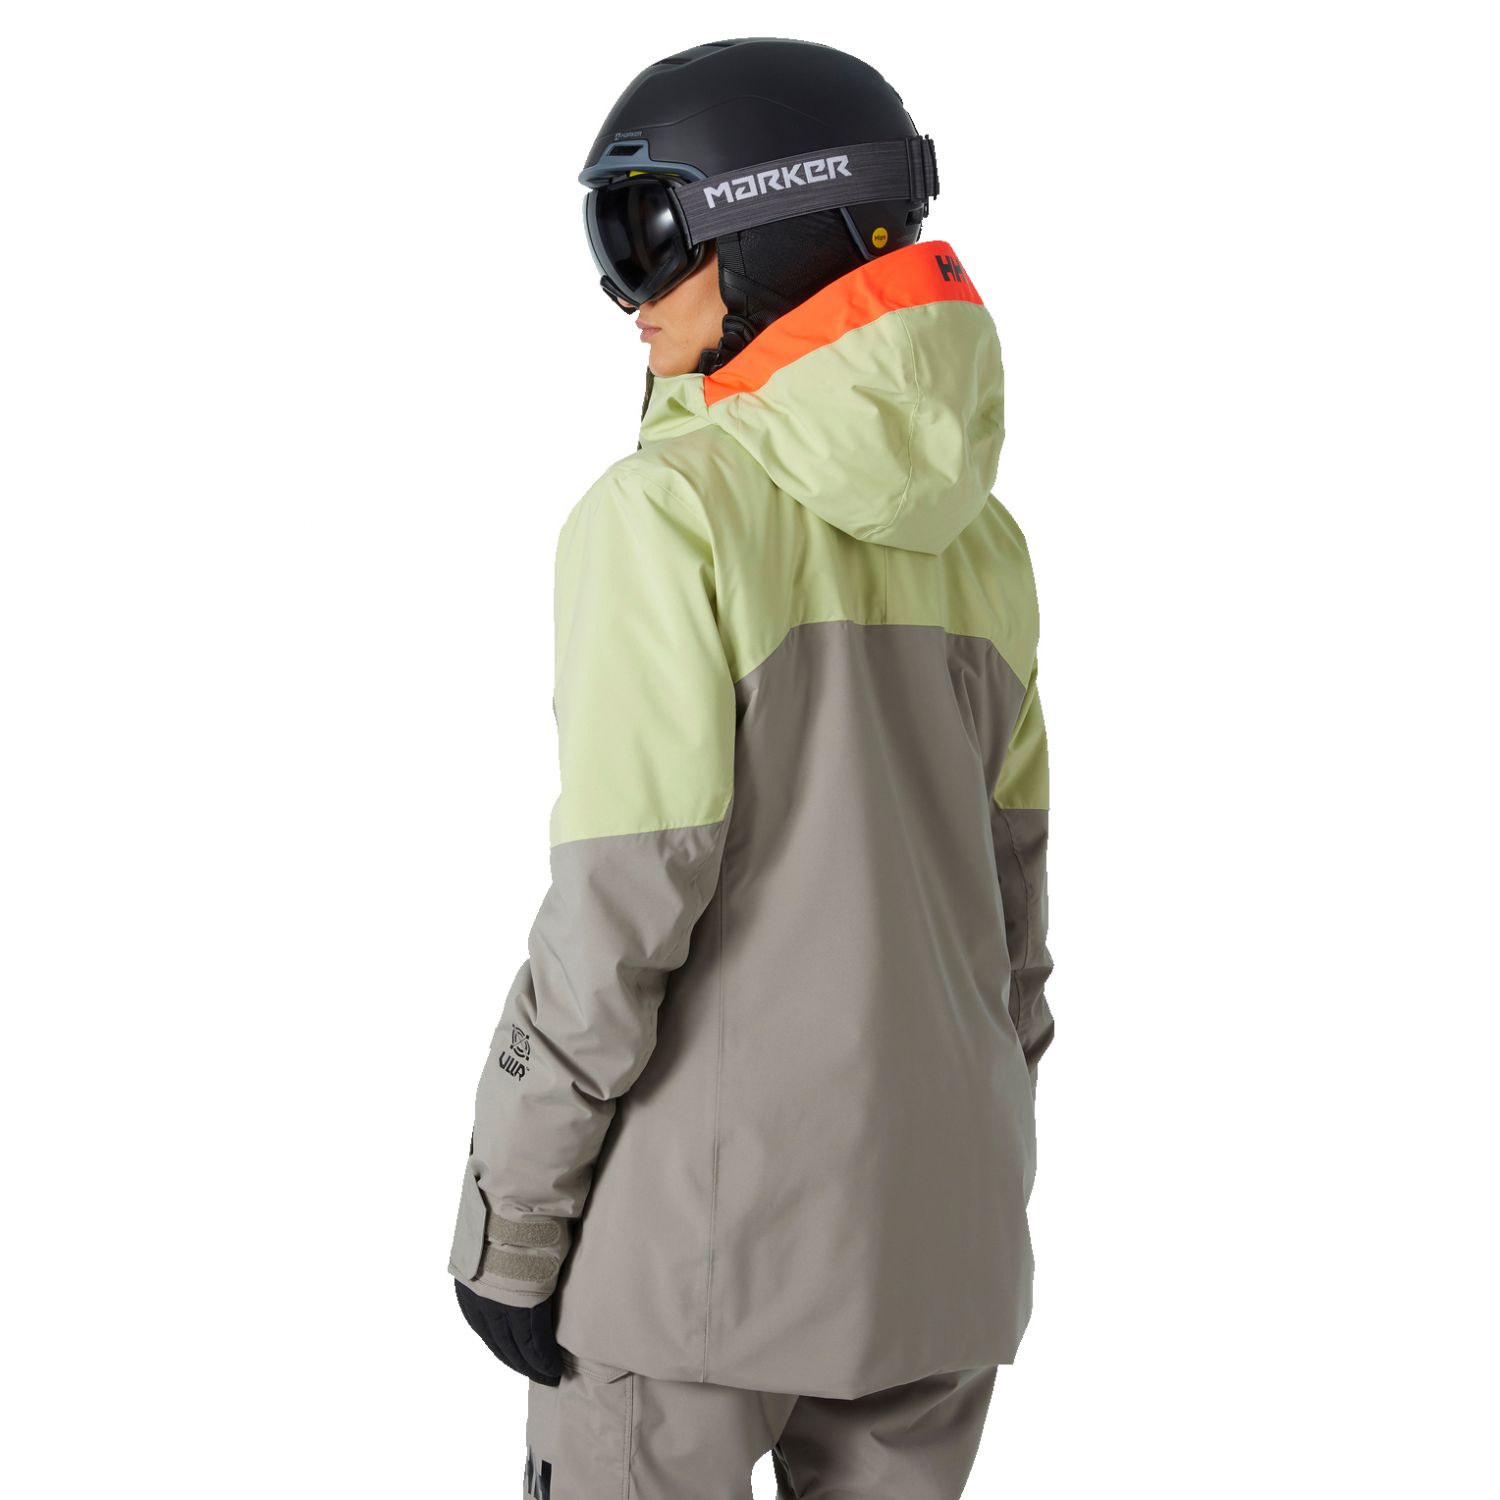 Helly Hansen Powshot, ski jacket, women, iced matcha